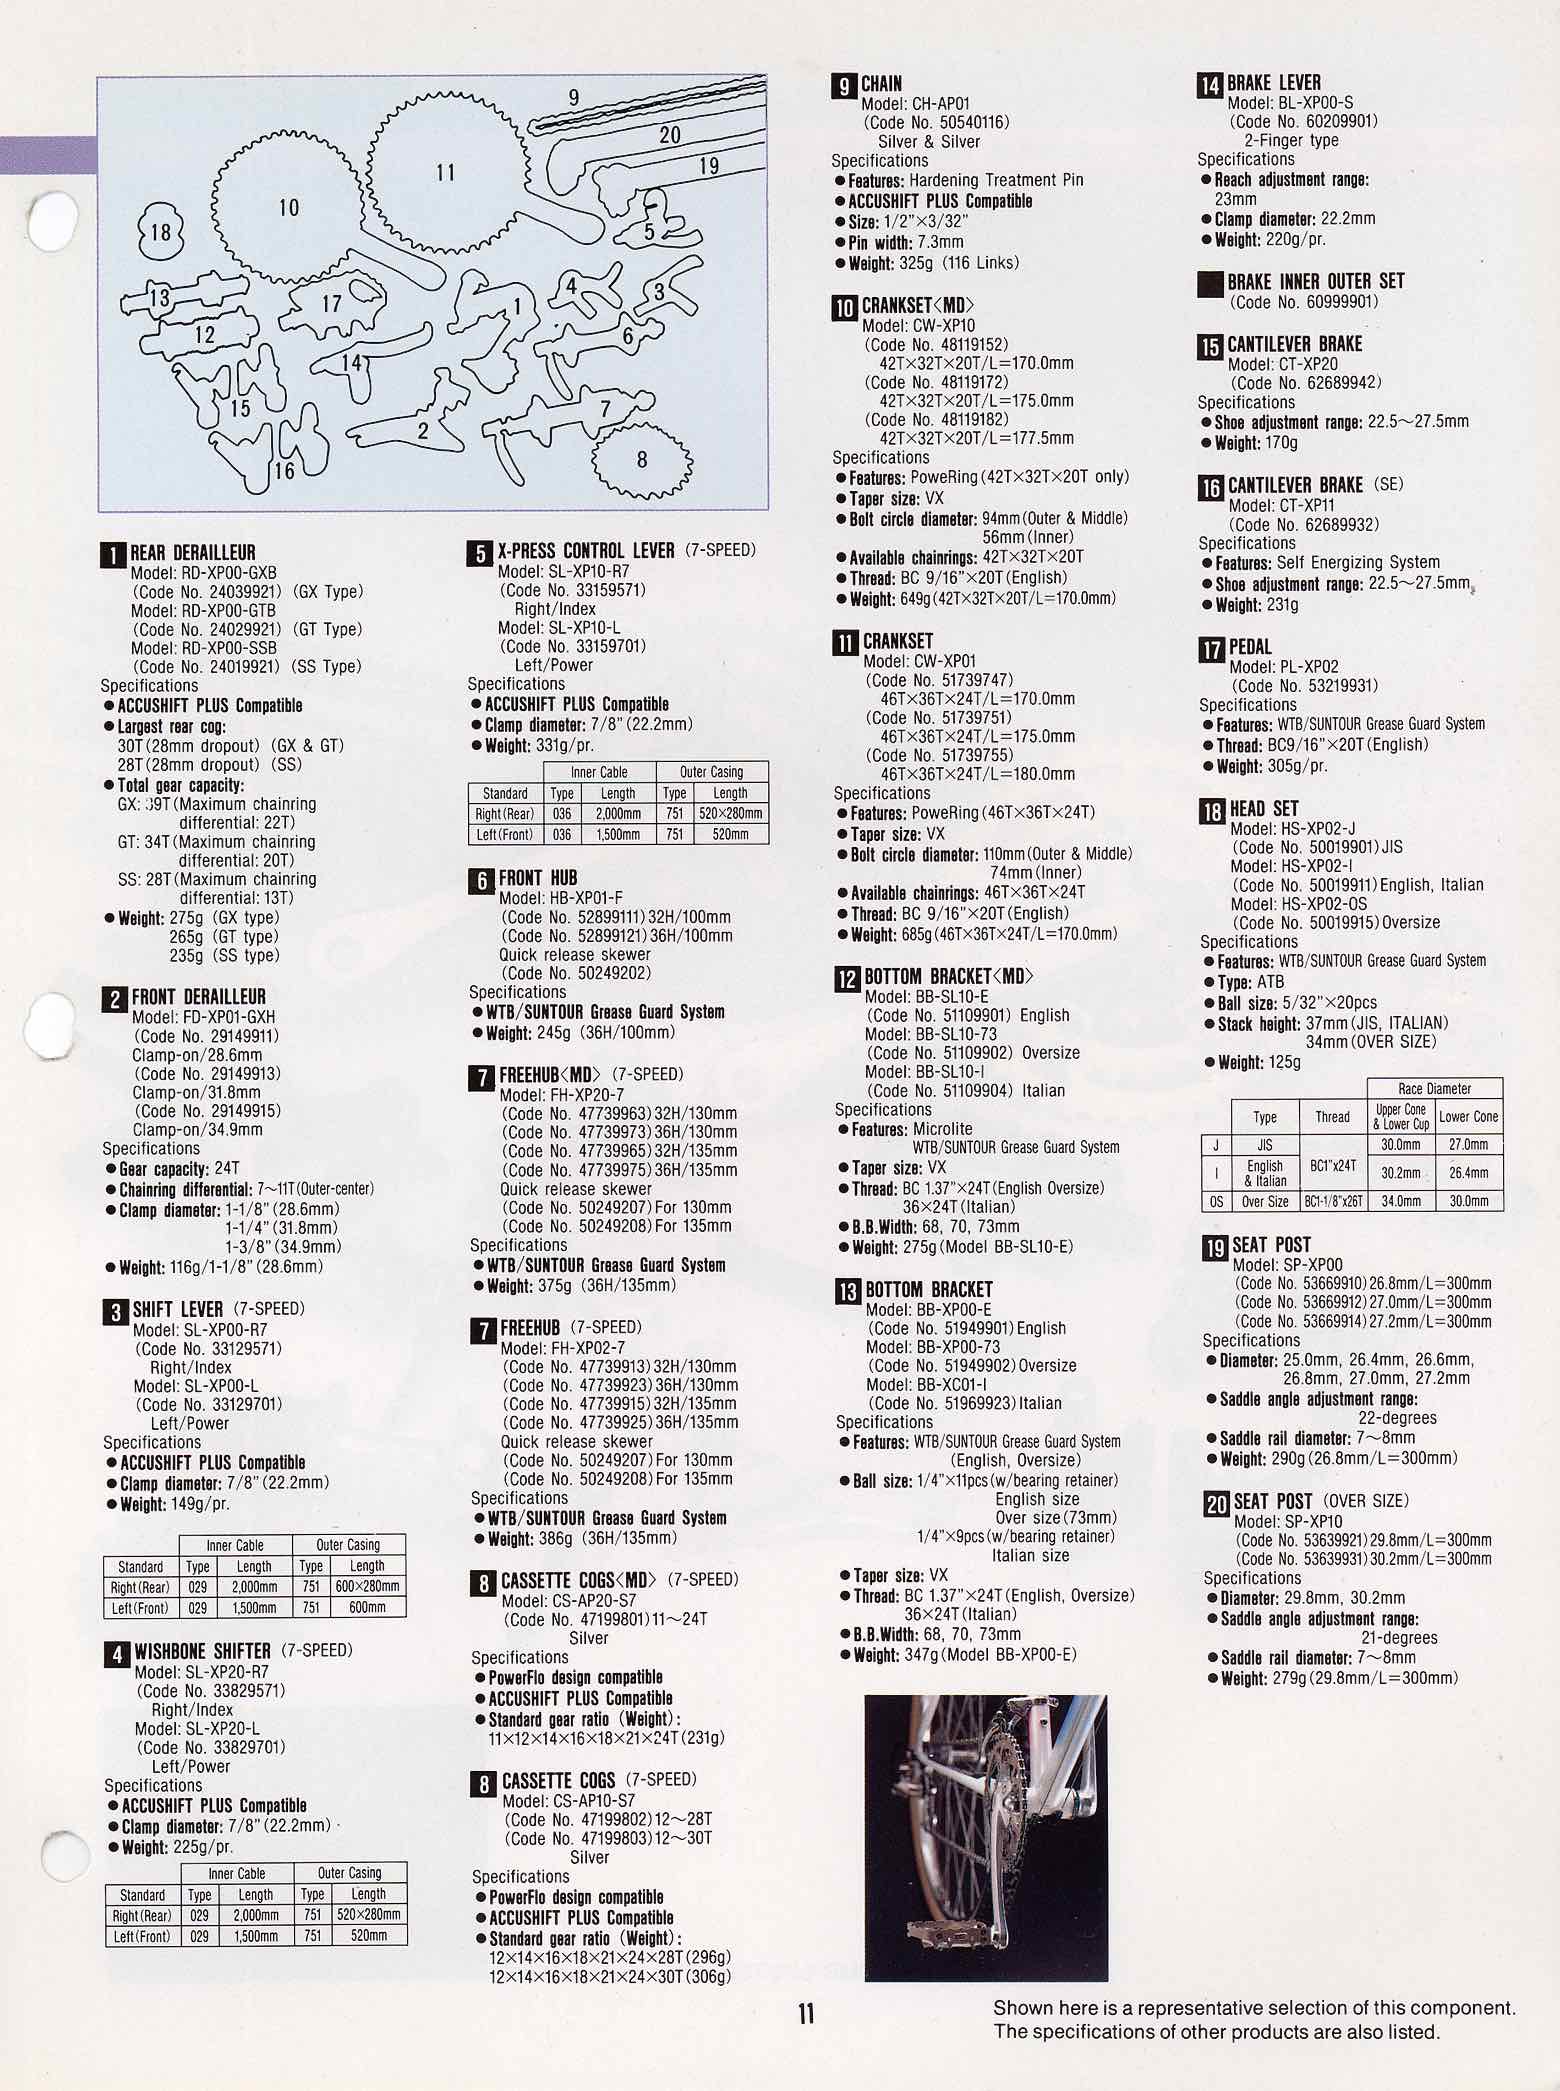 SunTour Bicycle Equipment Catalog 1992 - Page 11 main image